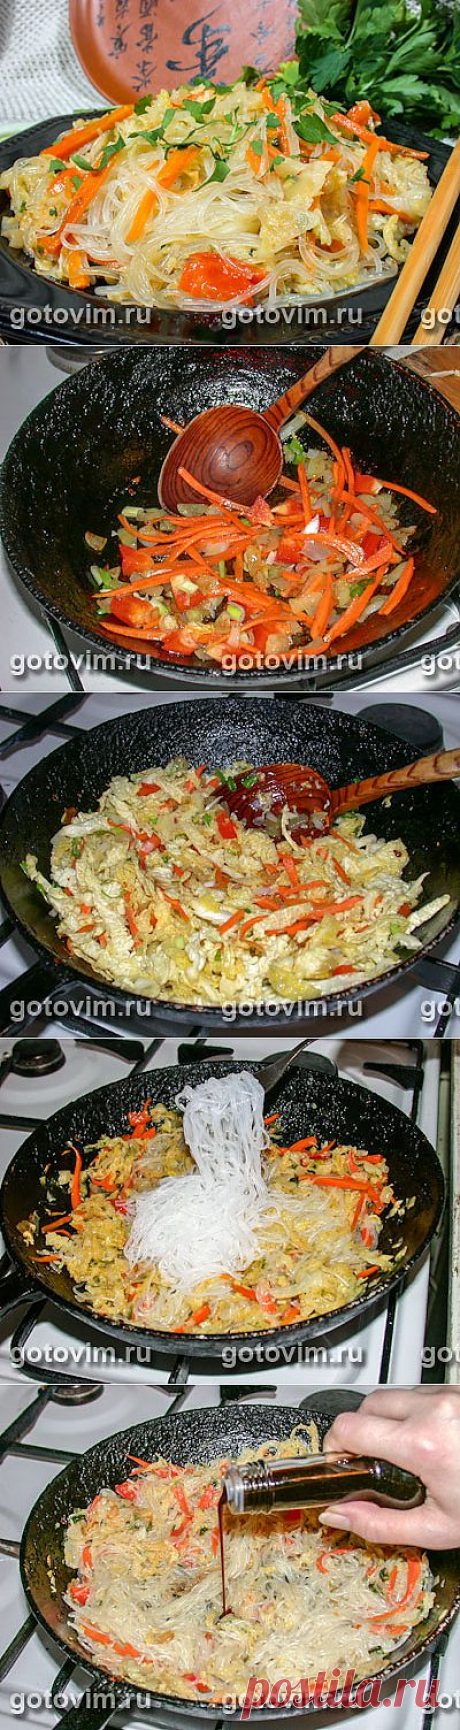 Рисовая лапша с овощами. Фото-рецепт / Готовим.РУ